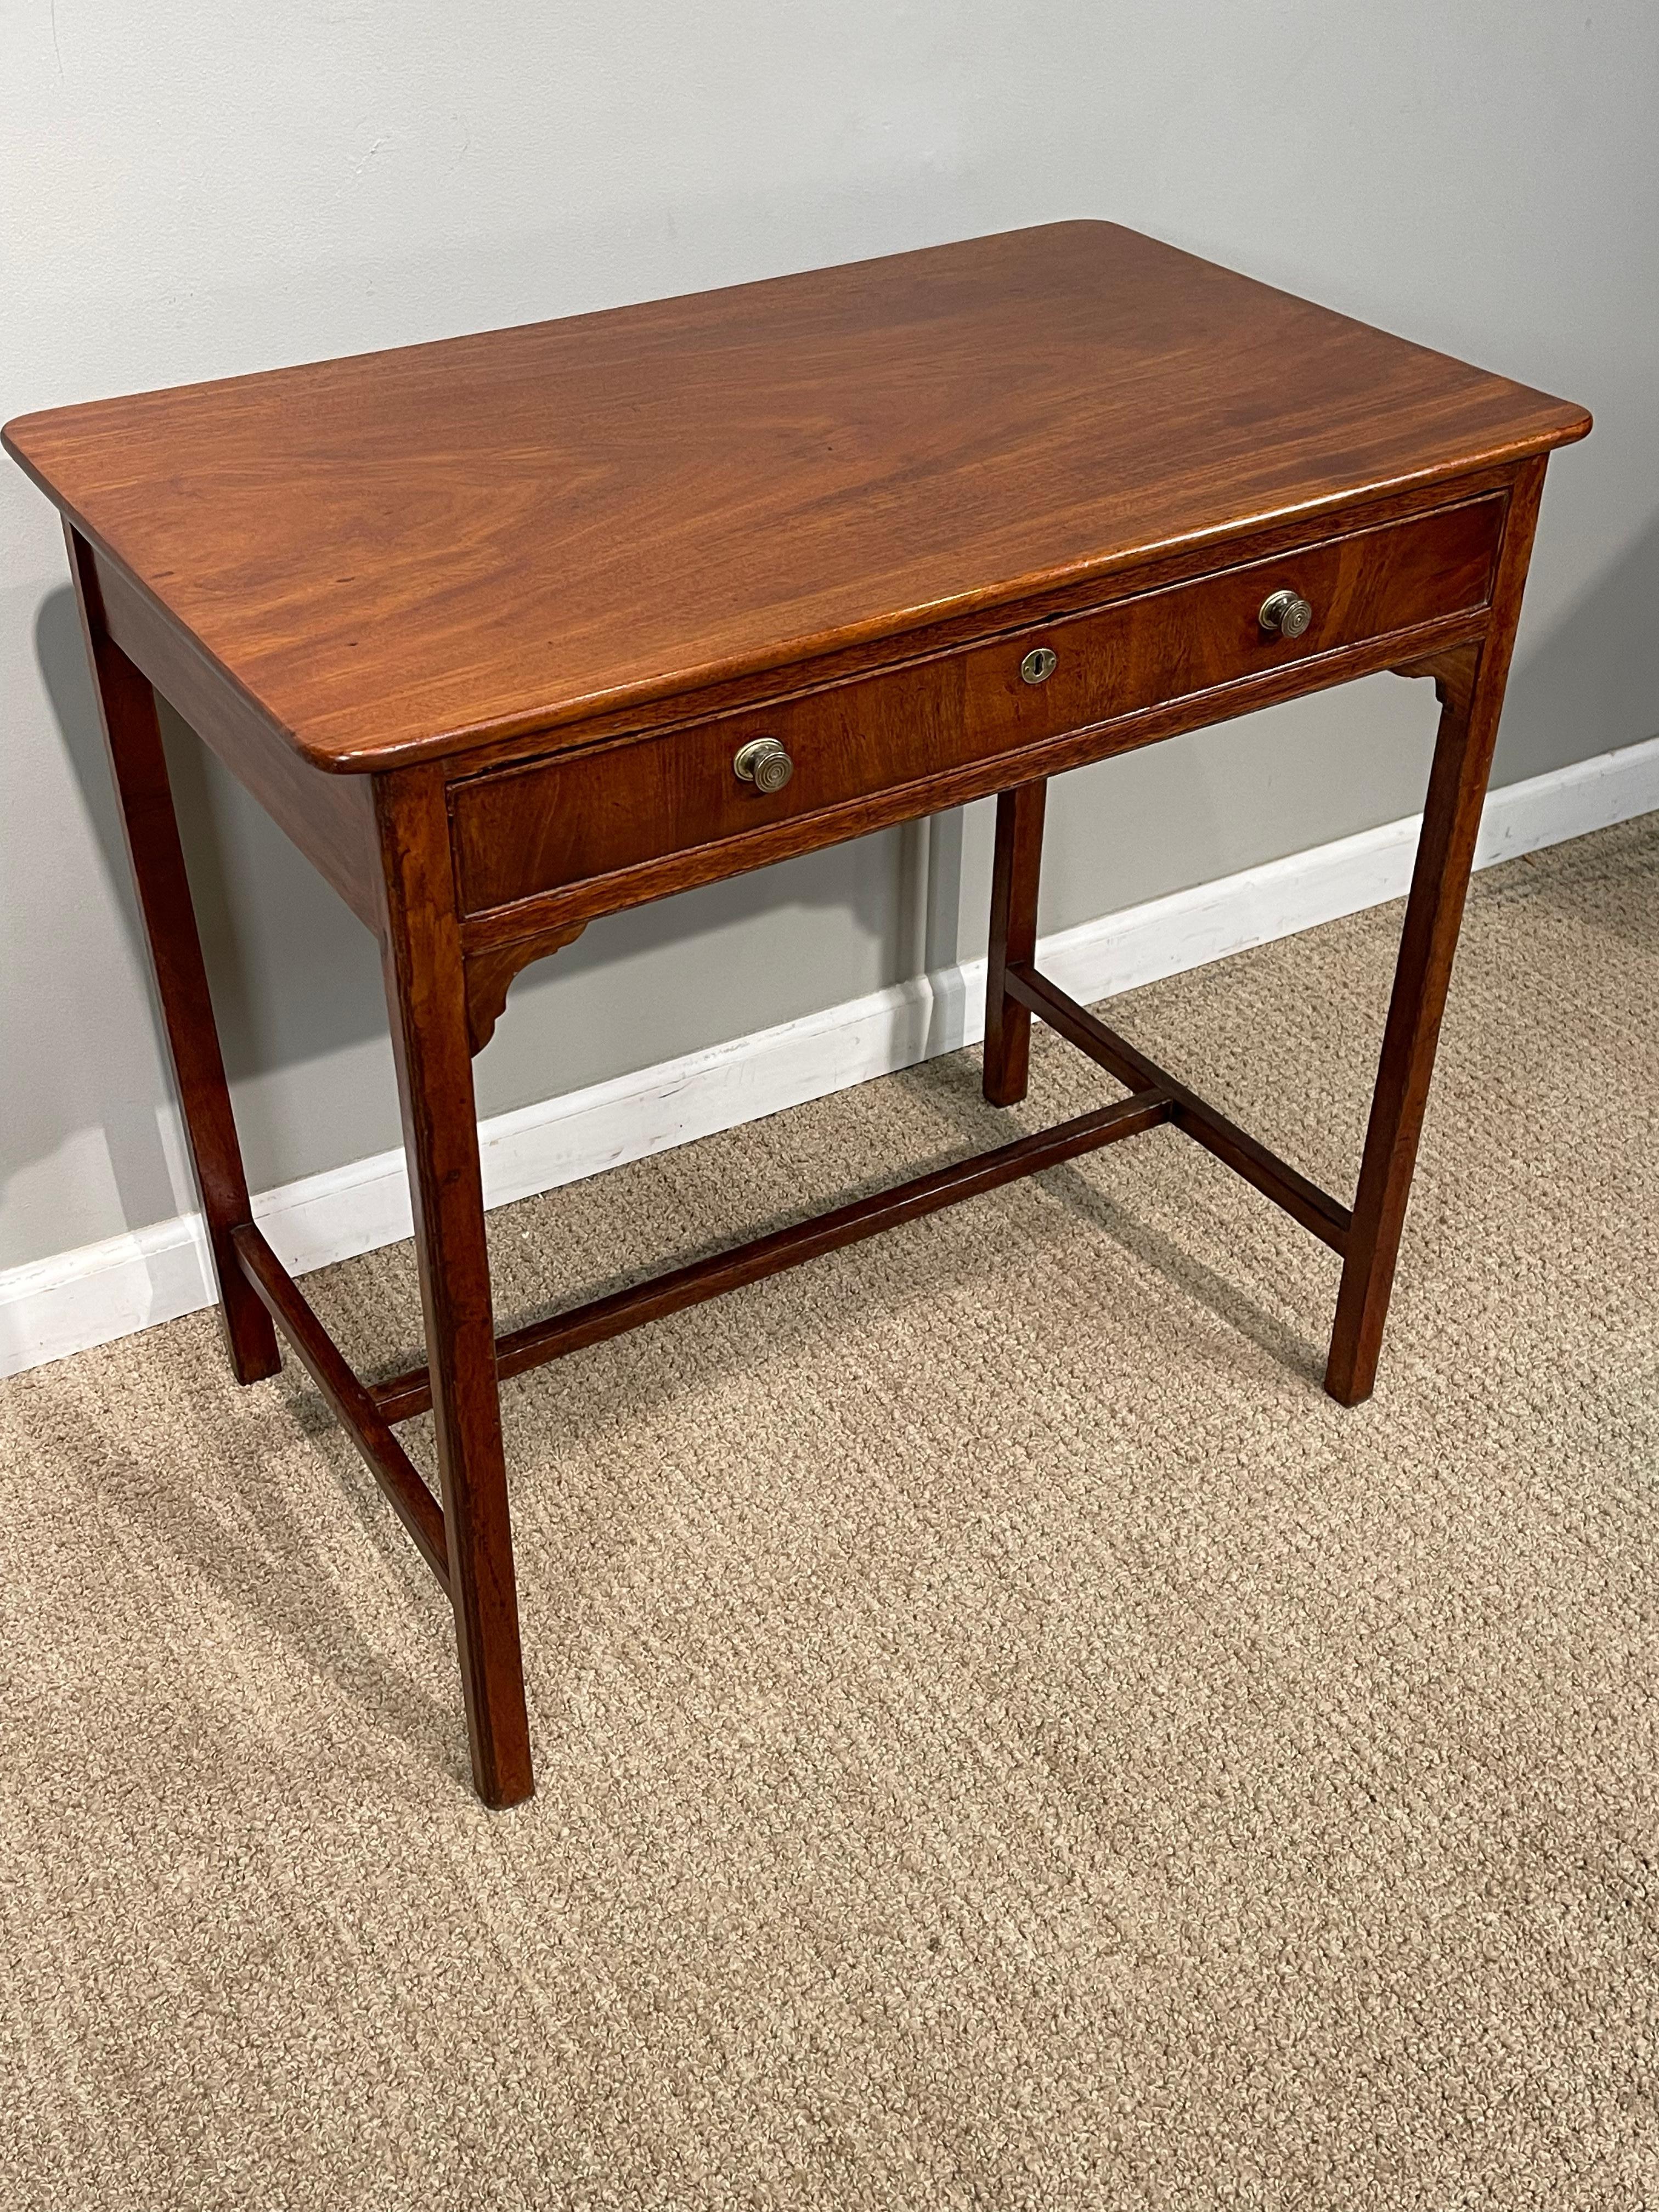 Polished George III Mahogany Single Drawer Side Table